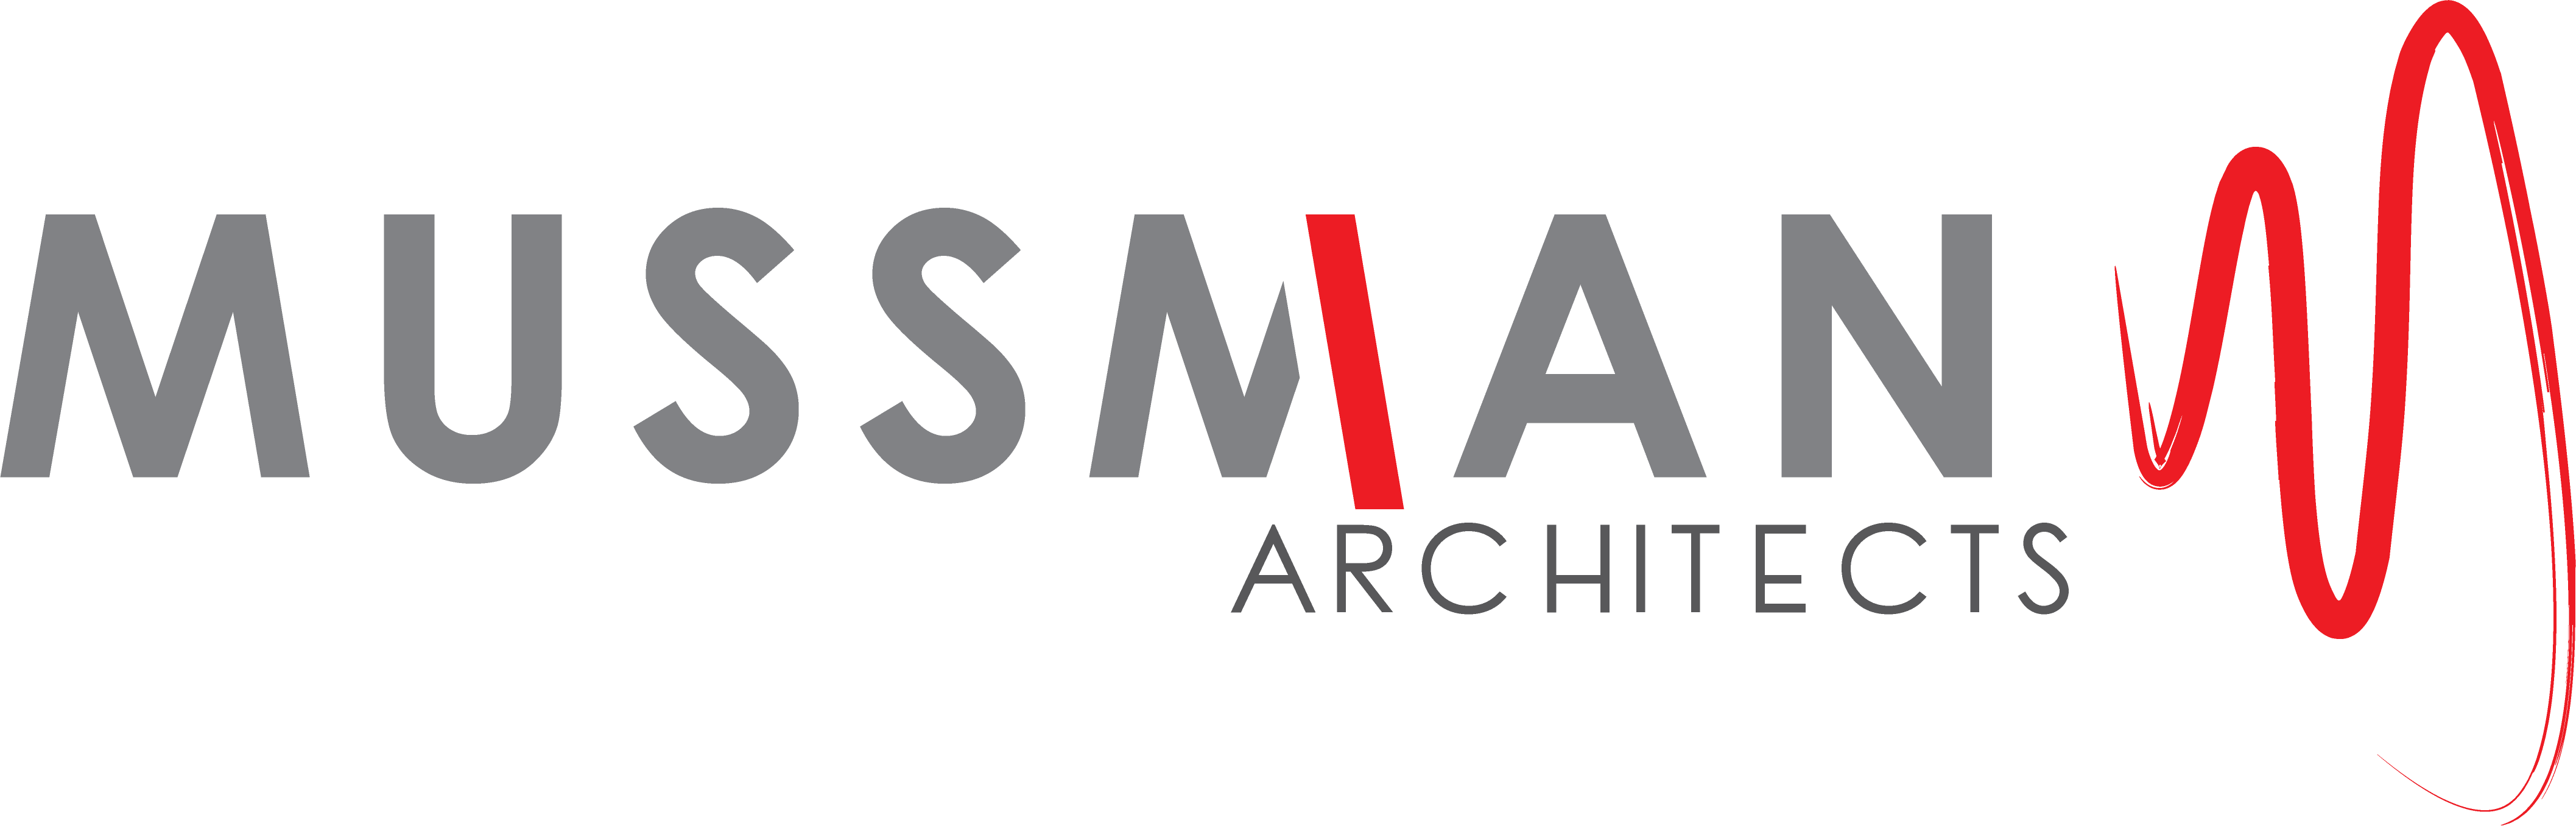 Mussaman Architects logo